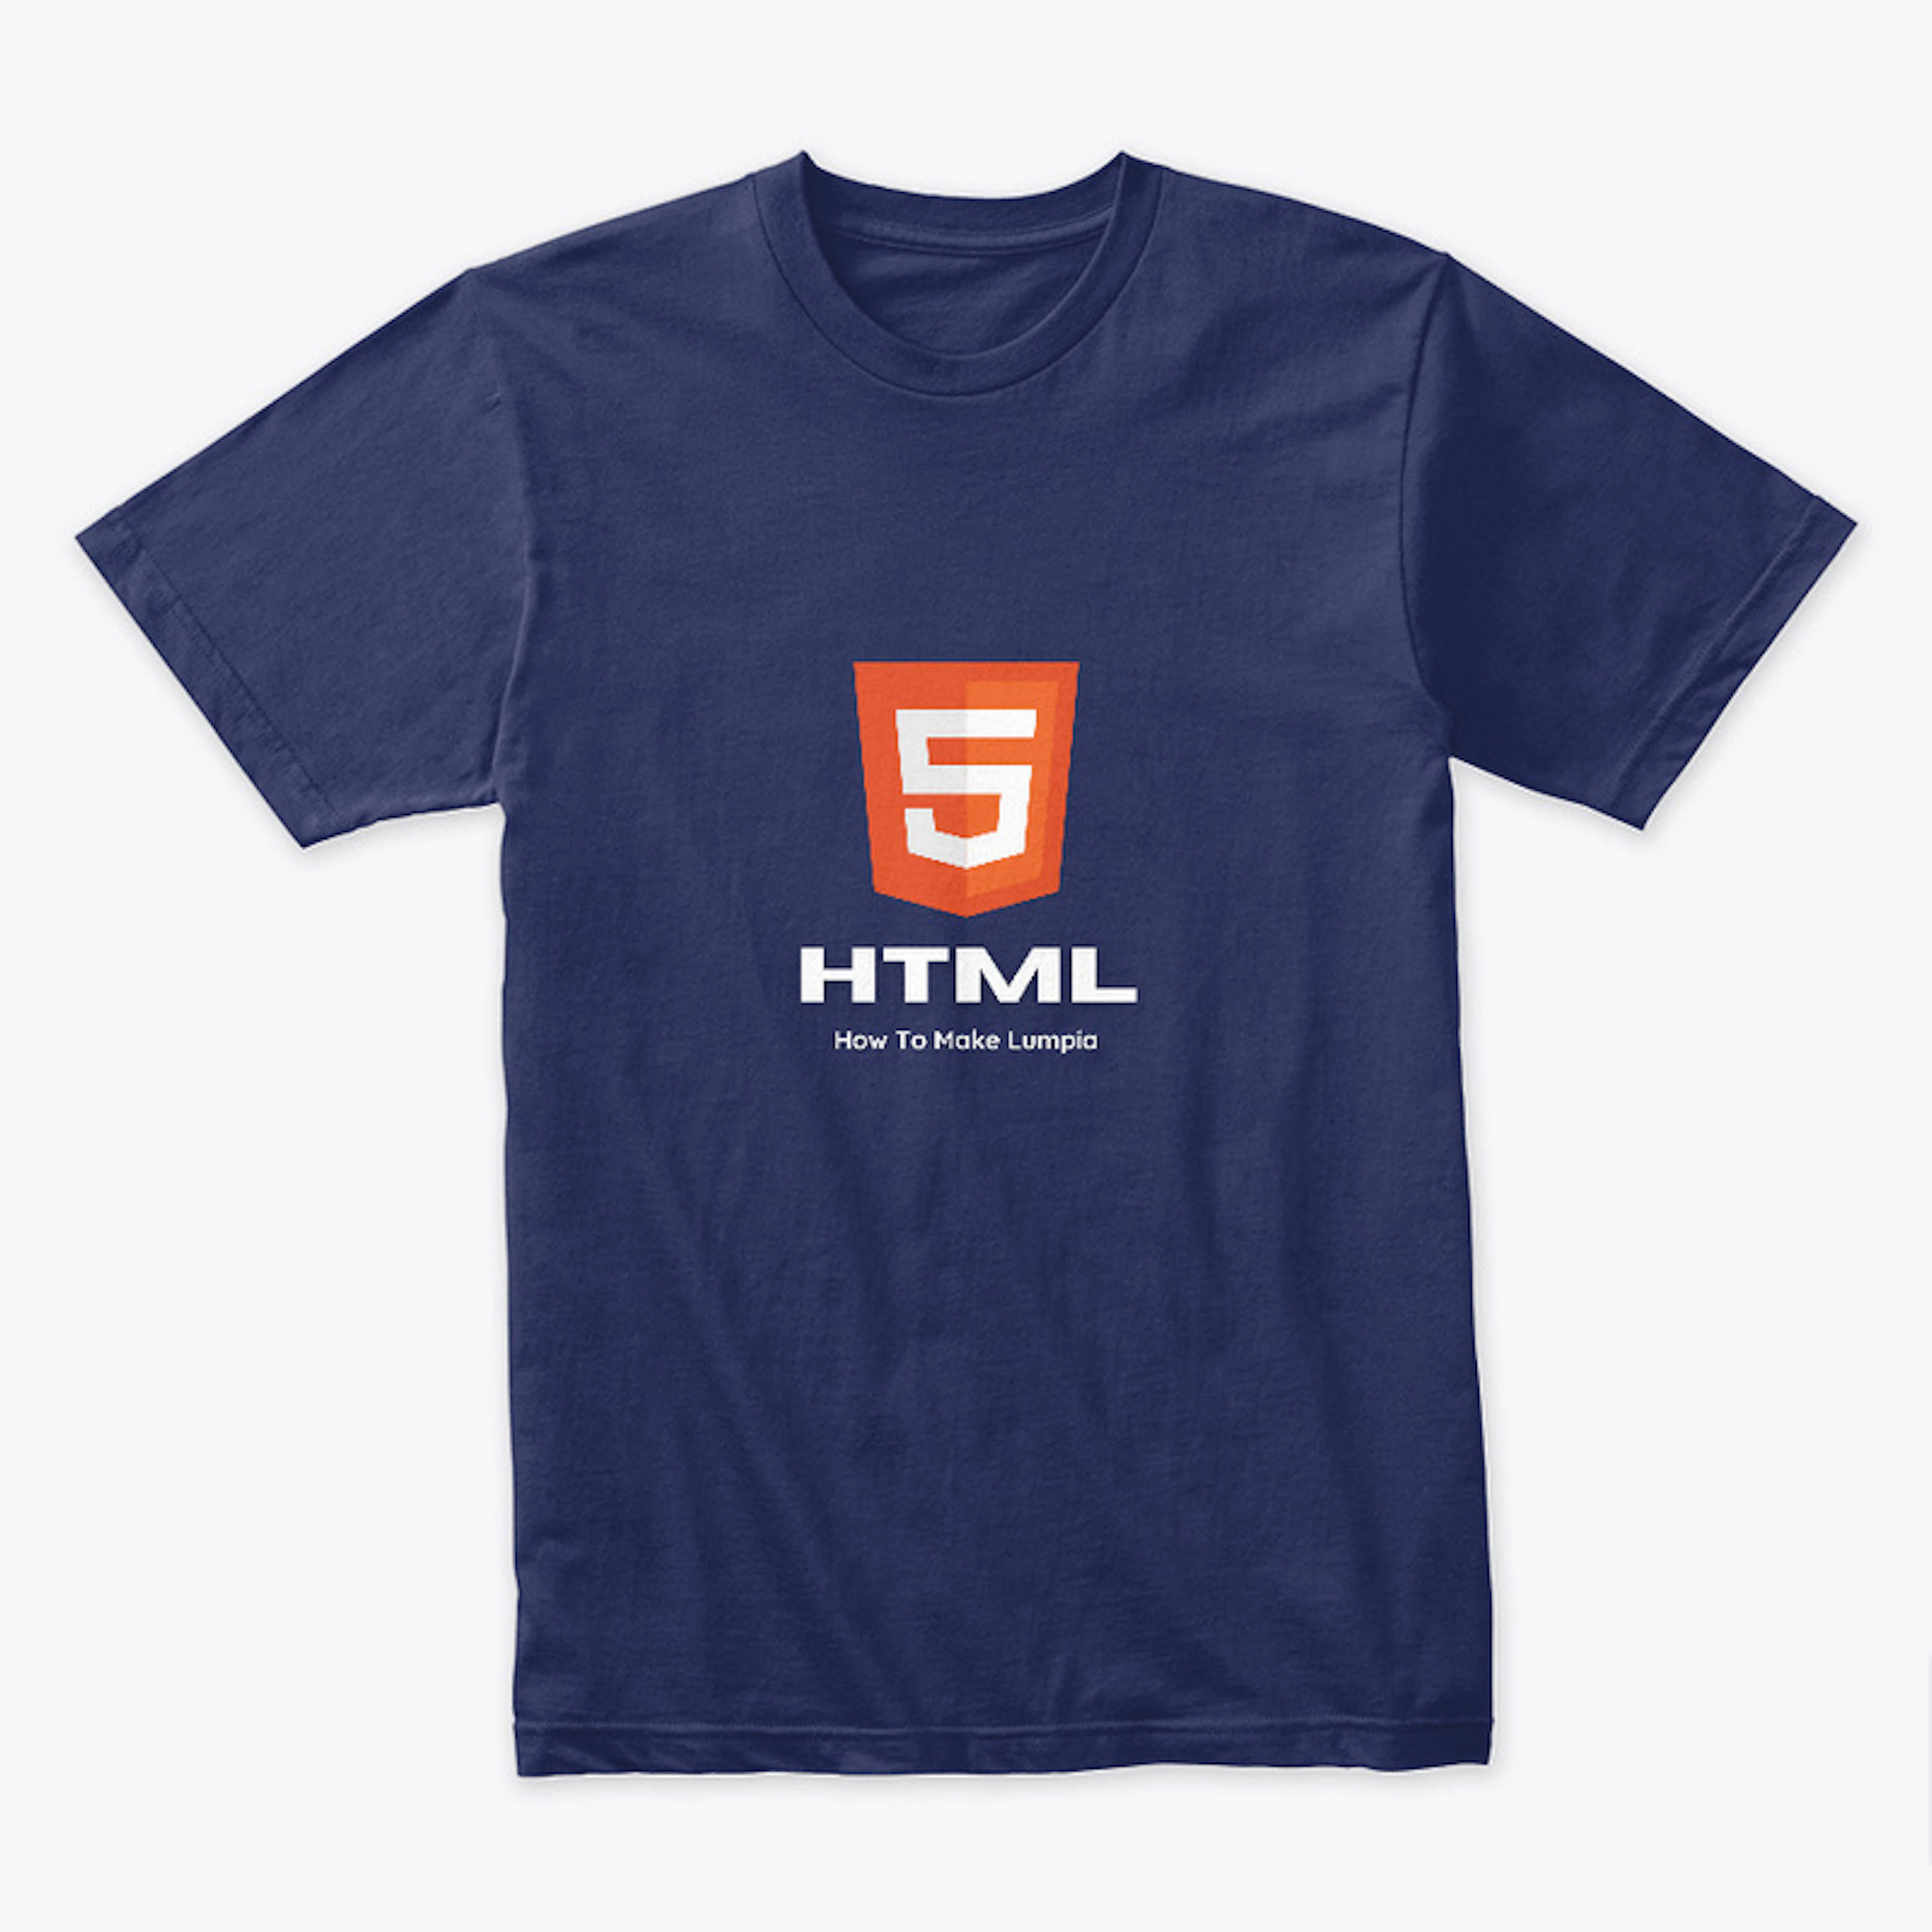 HTML - How To Make Lumpia